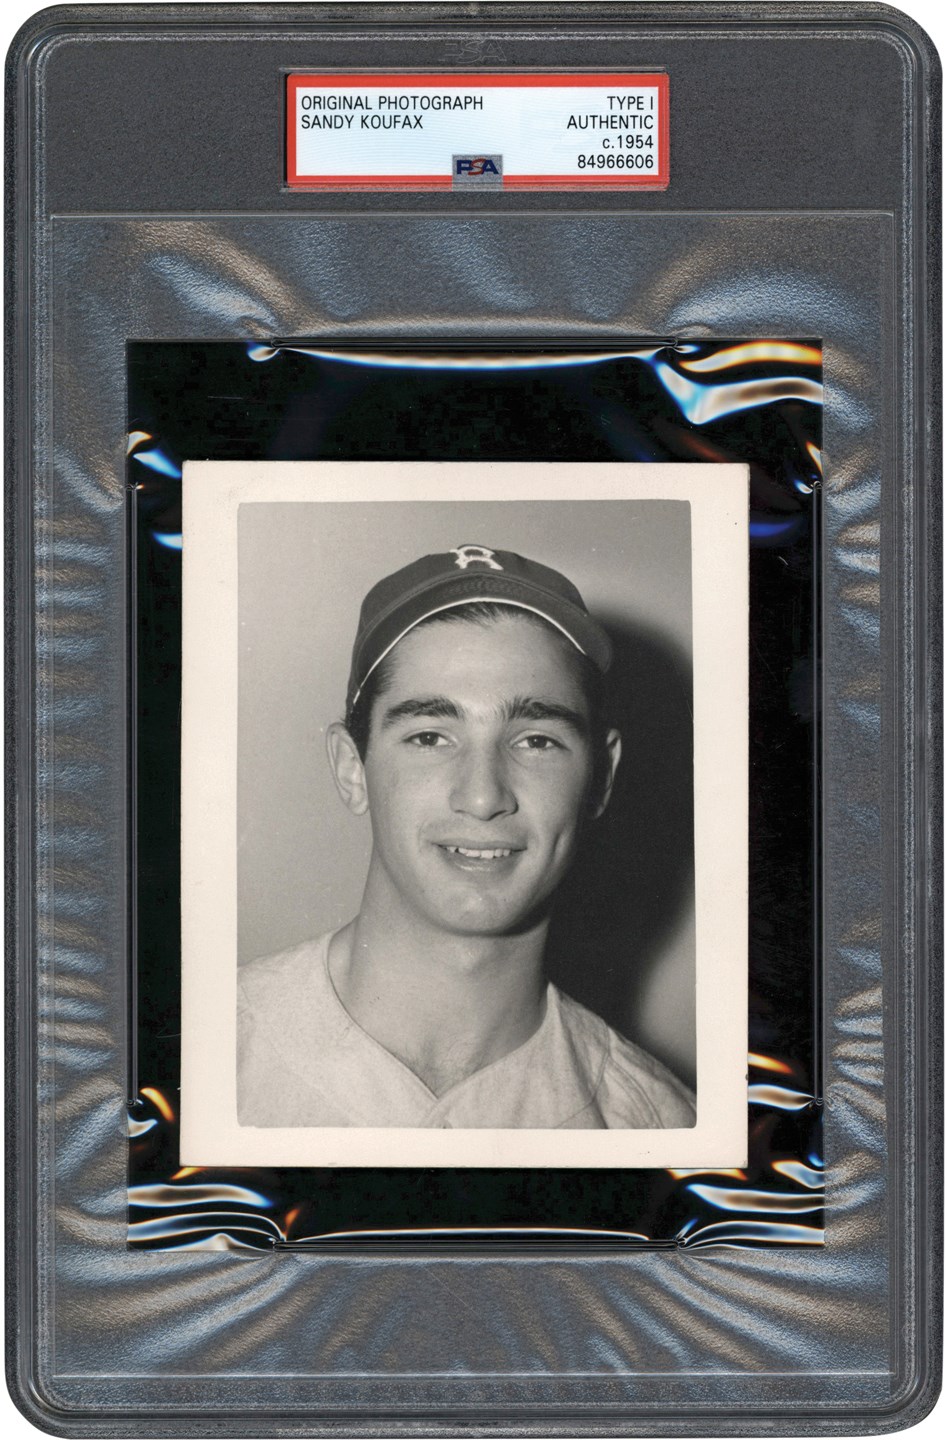 - Circa 1954 Sandy Koufax Rookie Photograph - Earliest Photo in a Brooklyn Dodgers Uniform (PSA Type I)